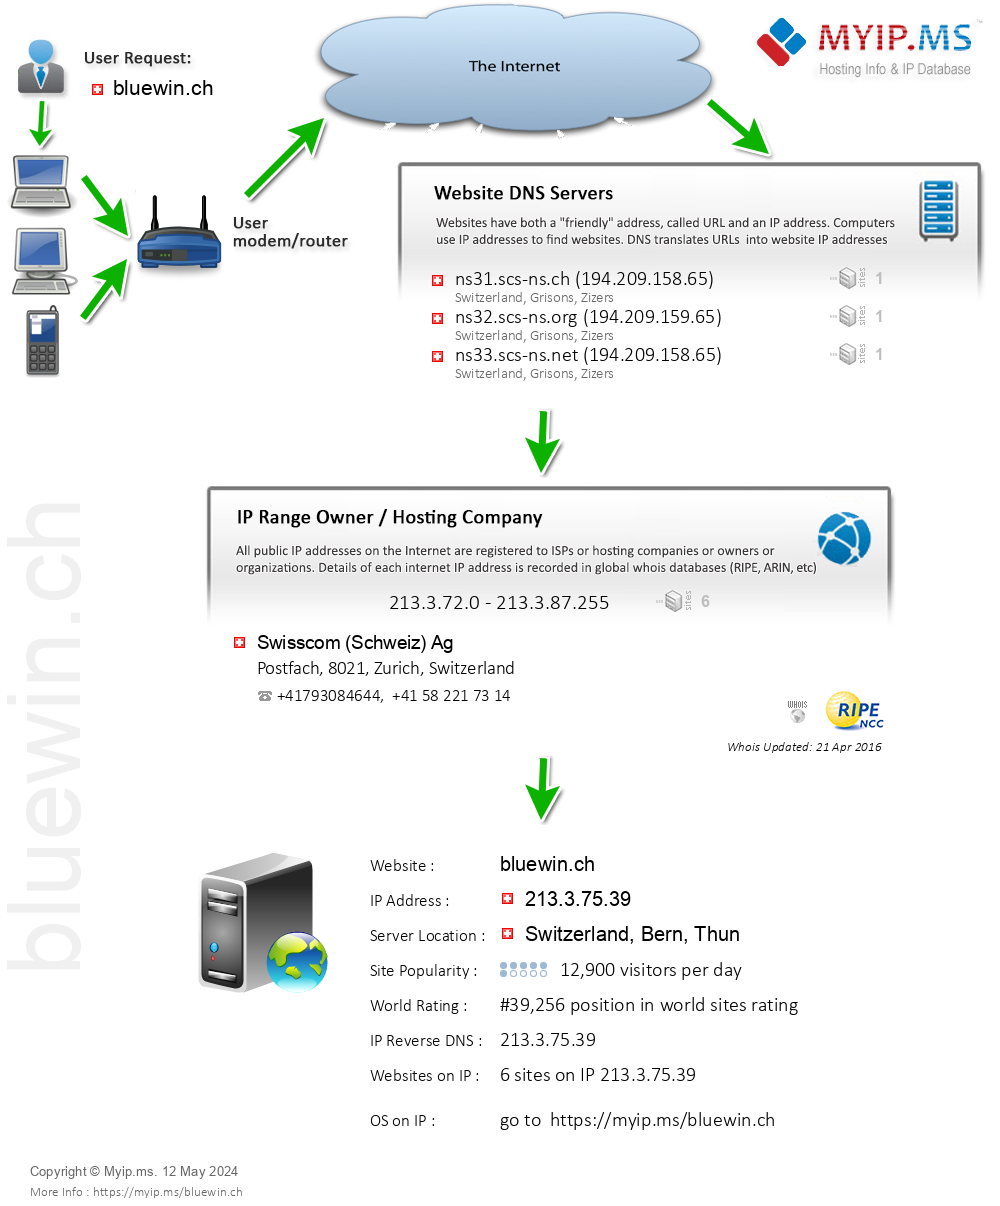 Bluewin.ch - Website Hosting Visual IP Diagram